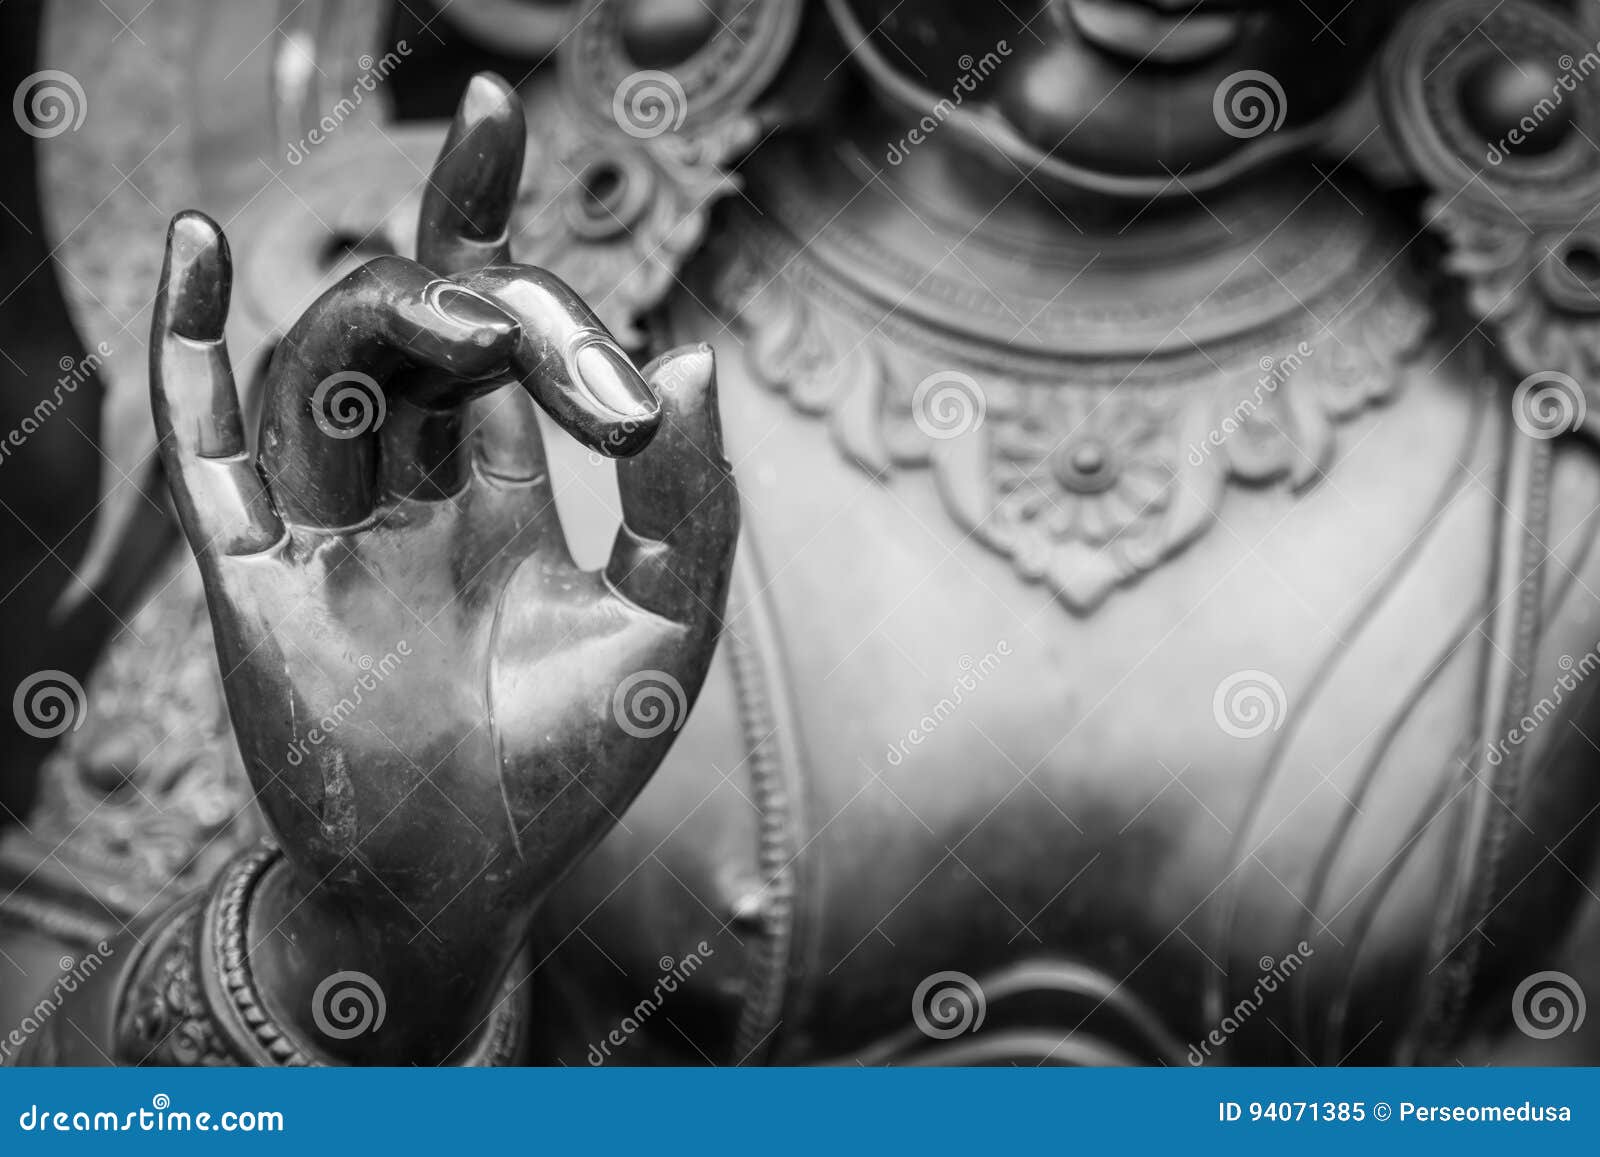 detail of buddha statue with karana mudra hand position